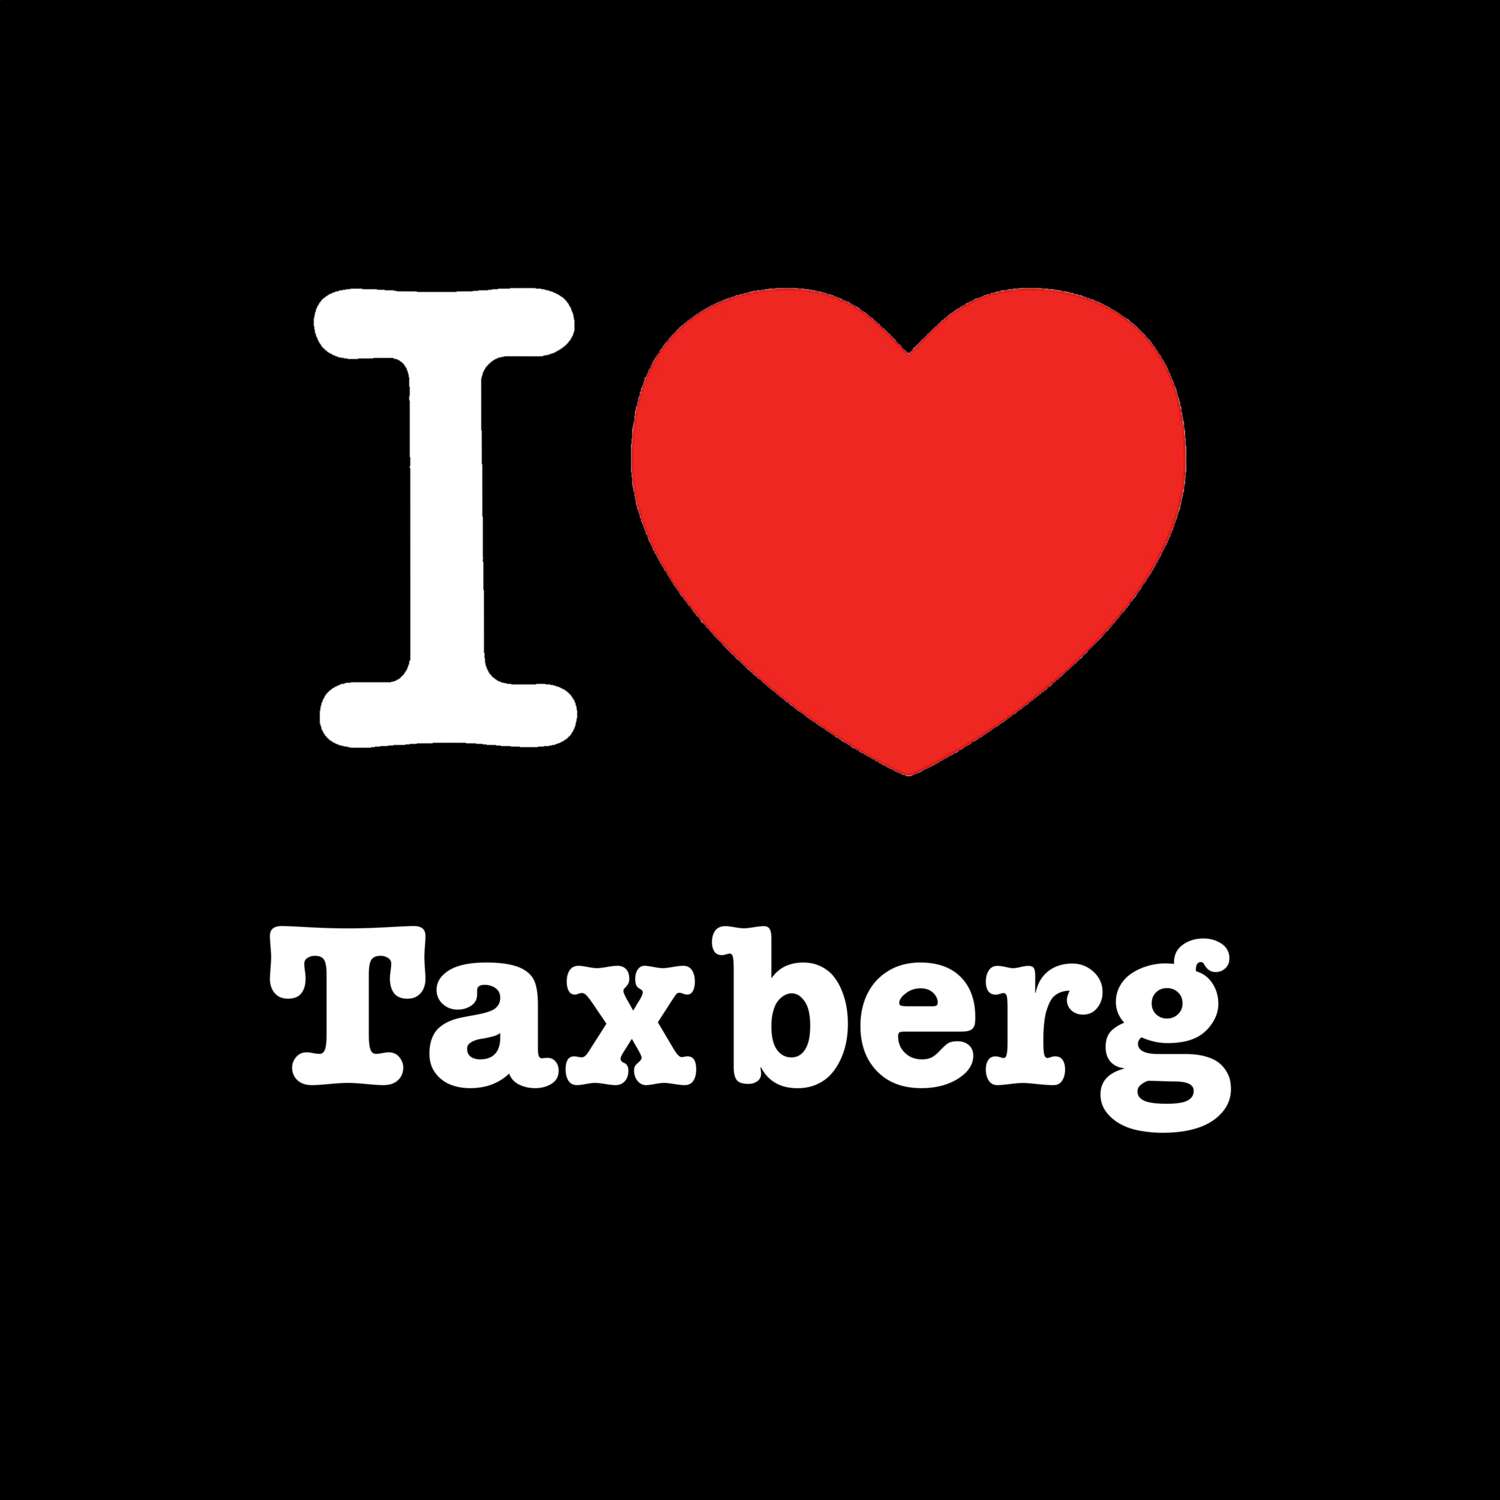 Taxberg T-Shirt »I love«